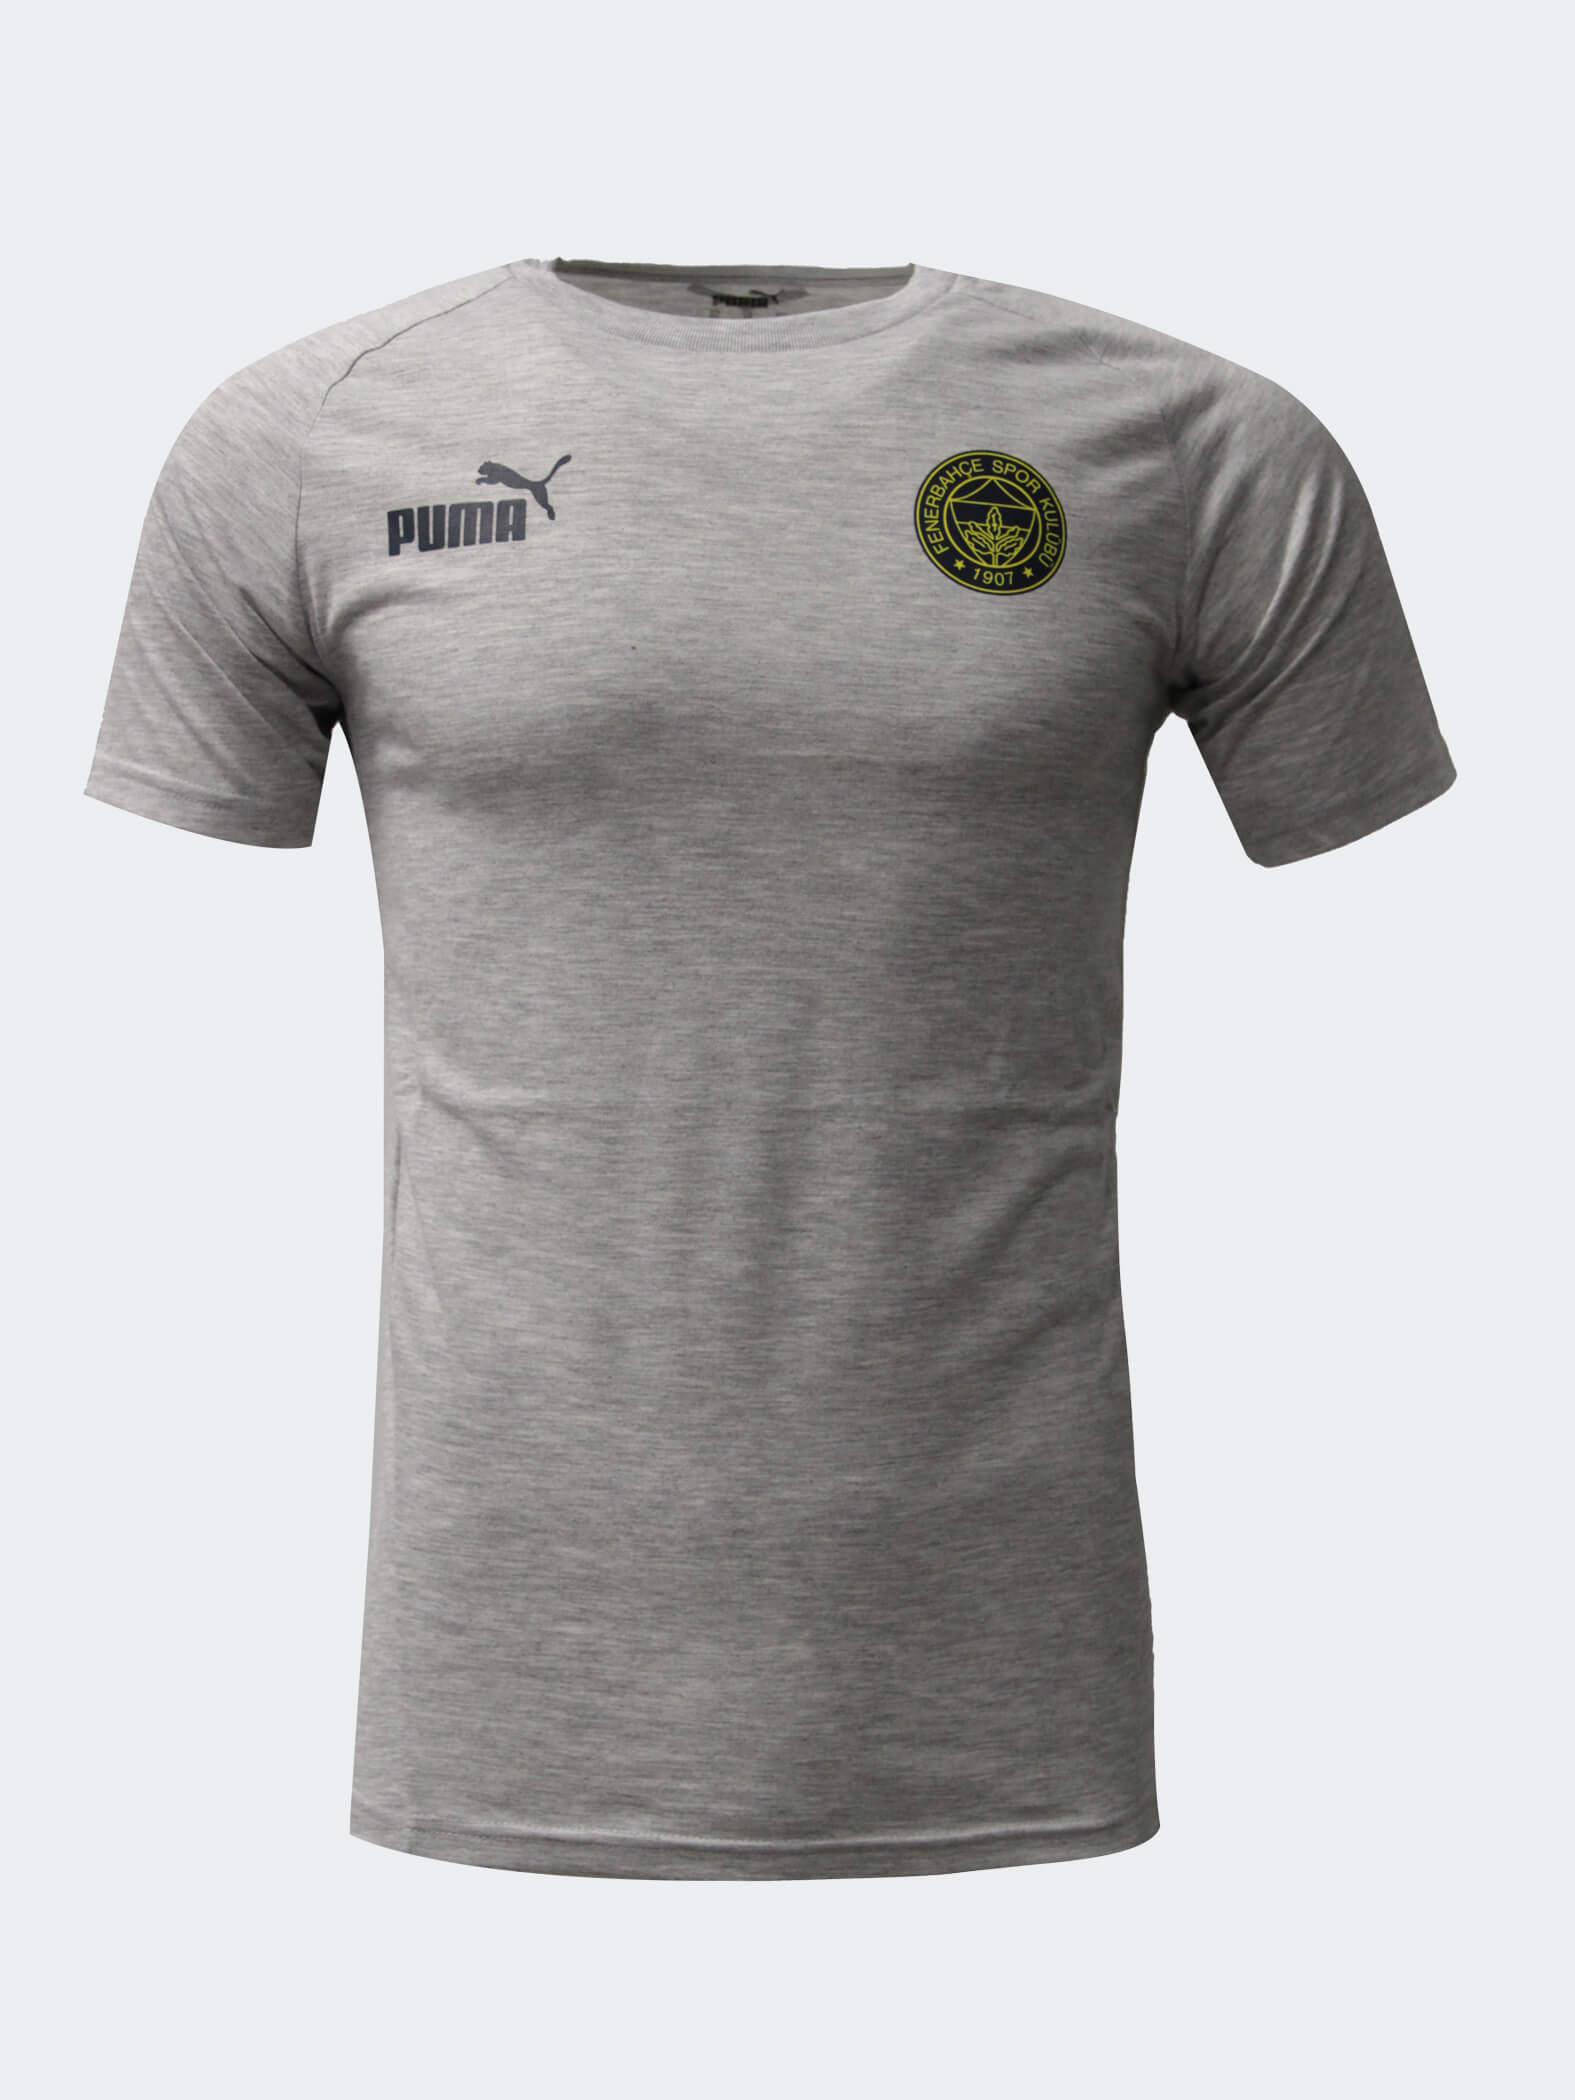 Puma Gri Fenerbahçe Baskılı Tshirt